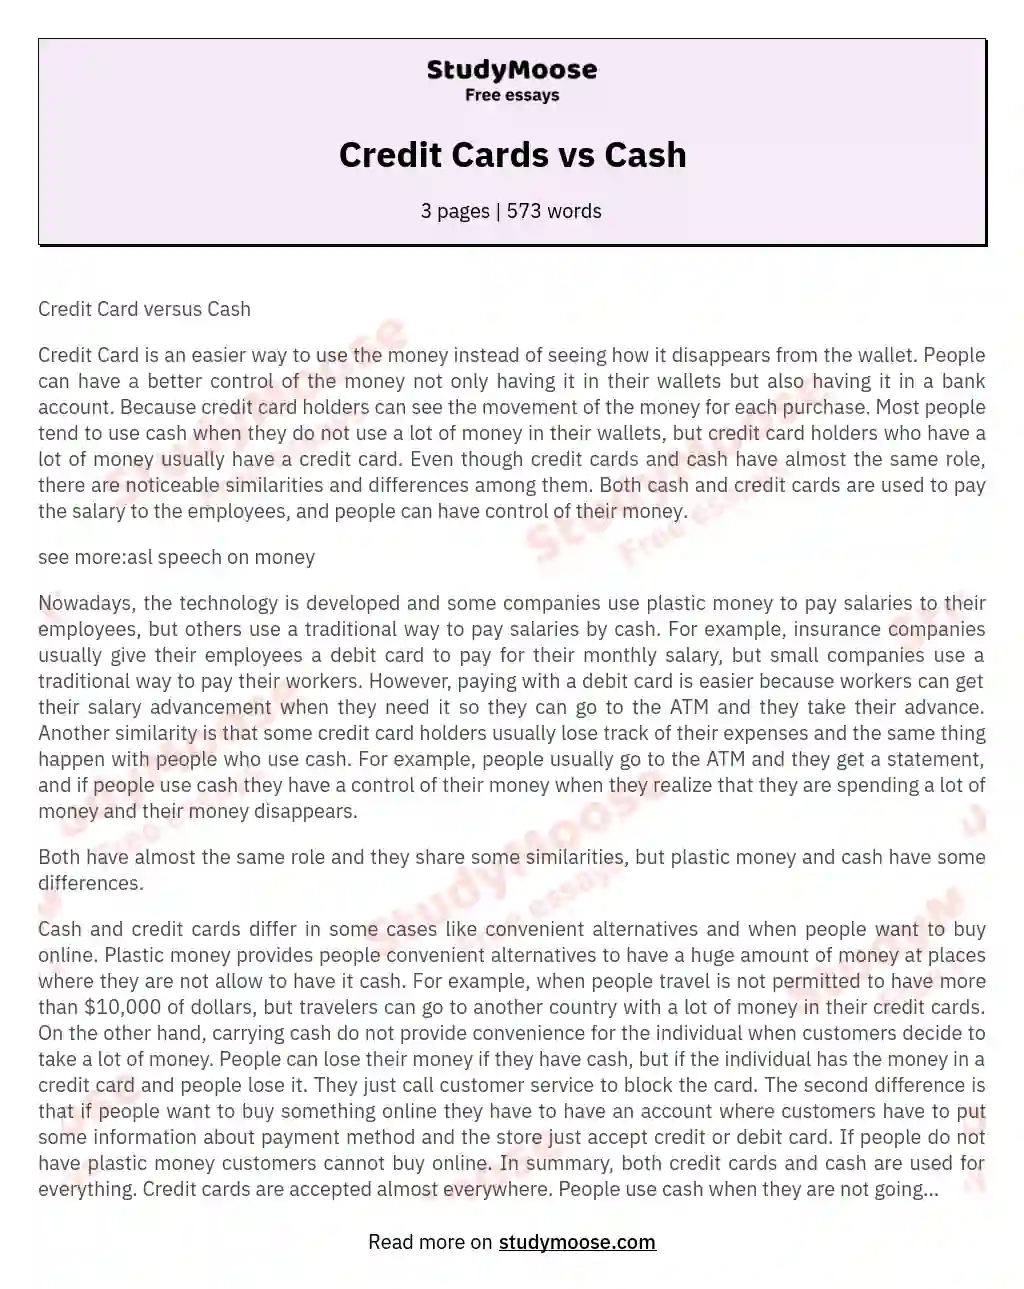 Credit Cards vs Cash essay